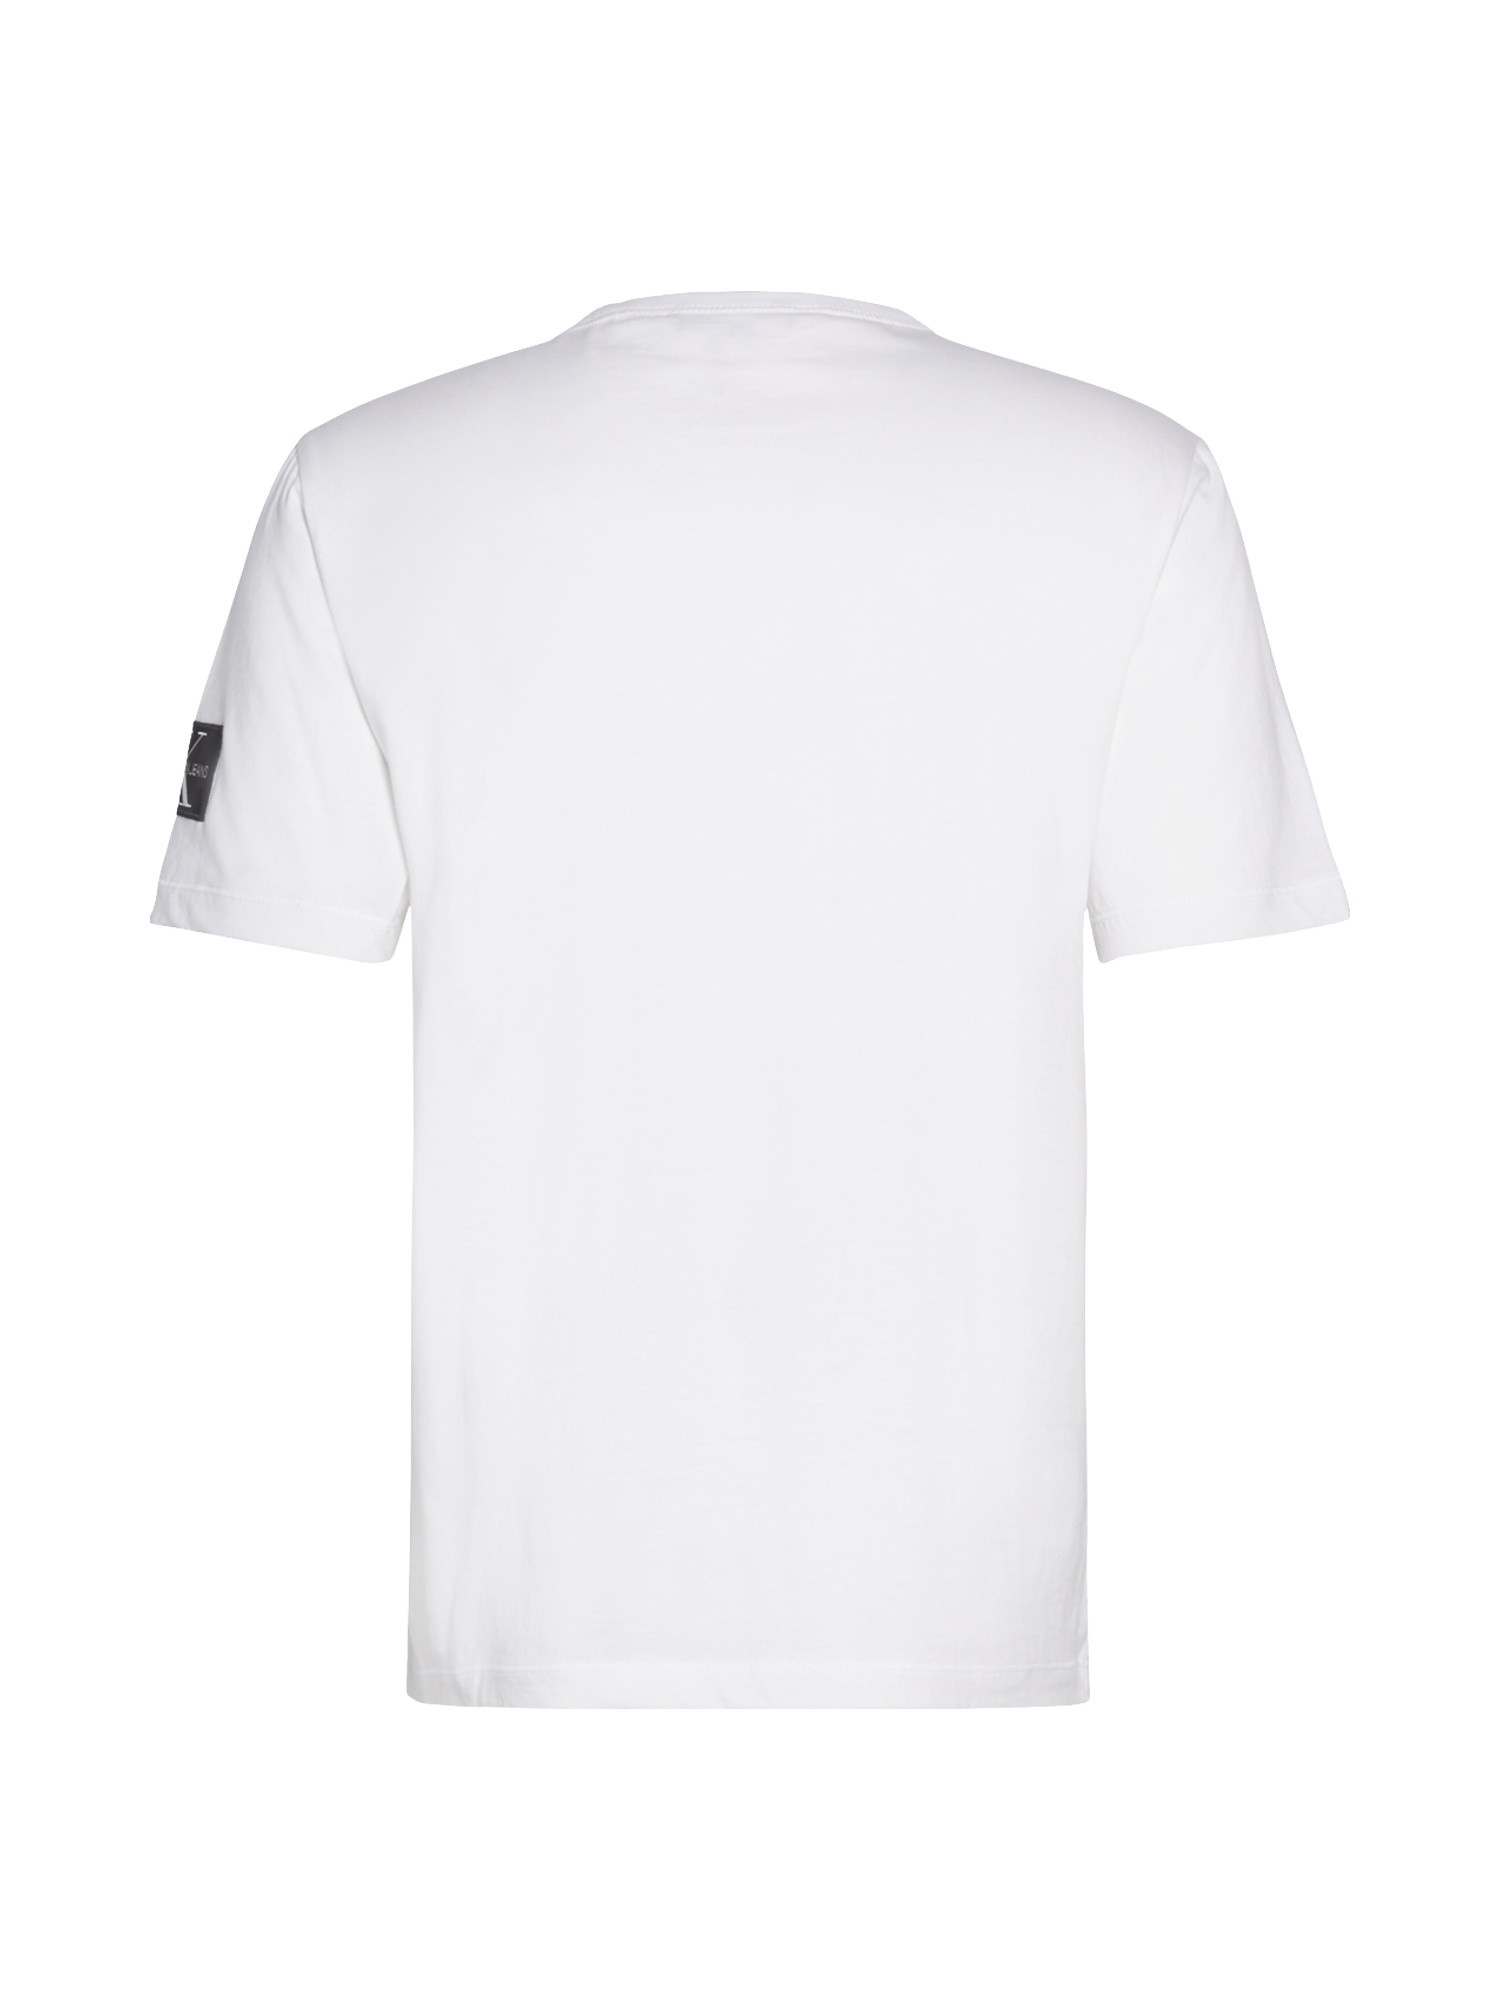 T-shirt with logo, White, large image number 1